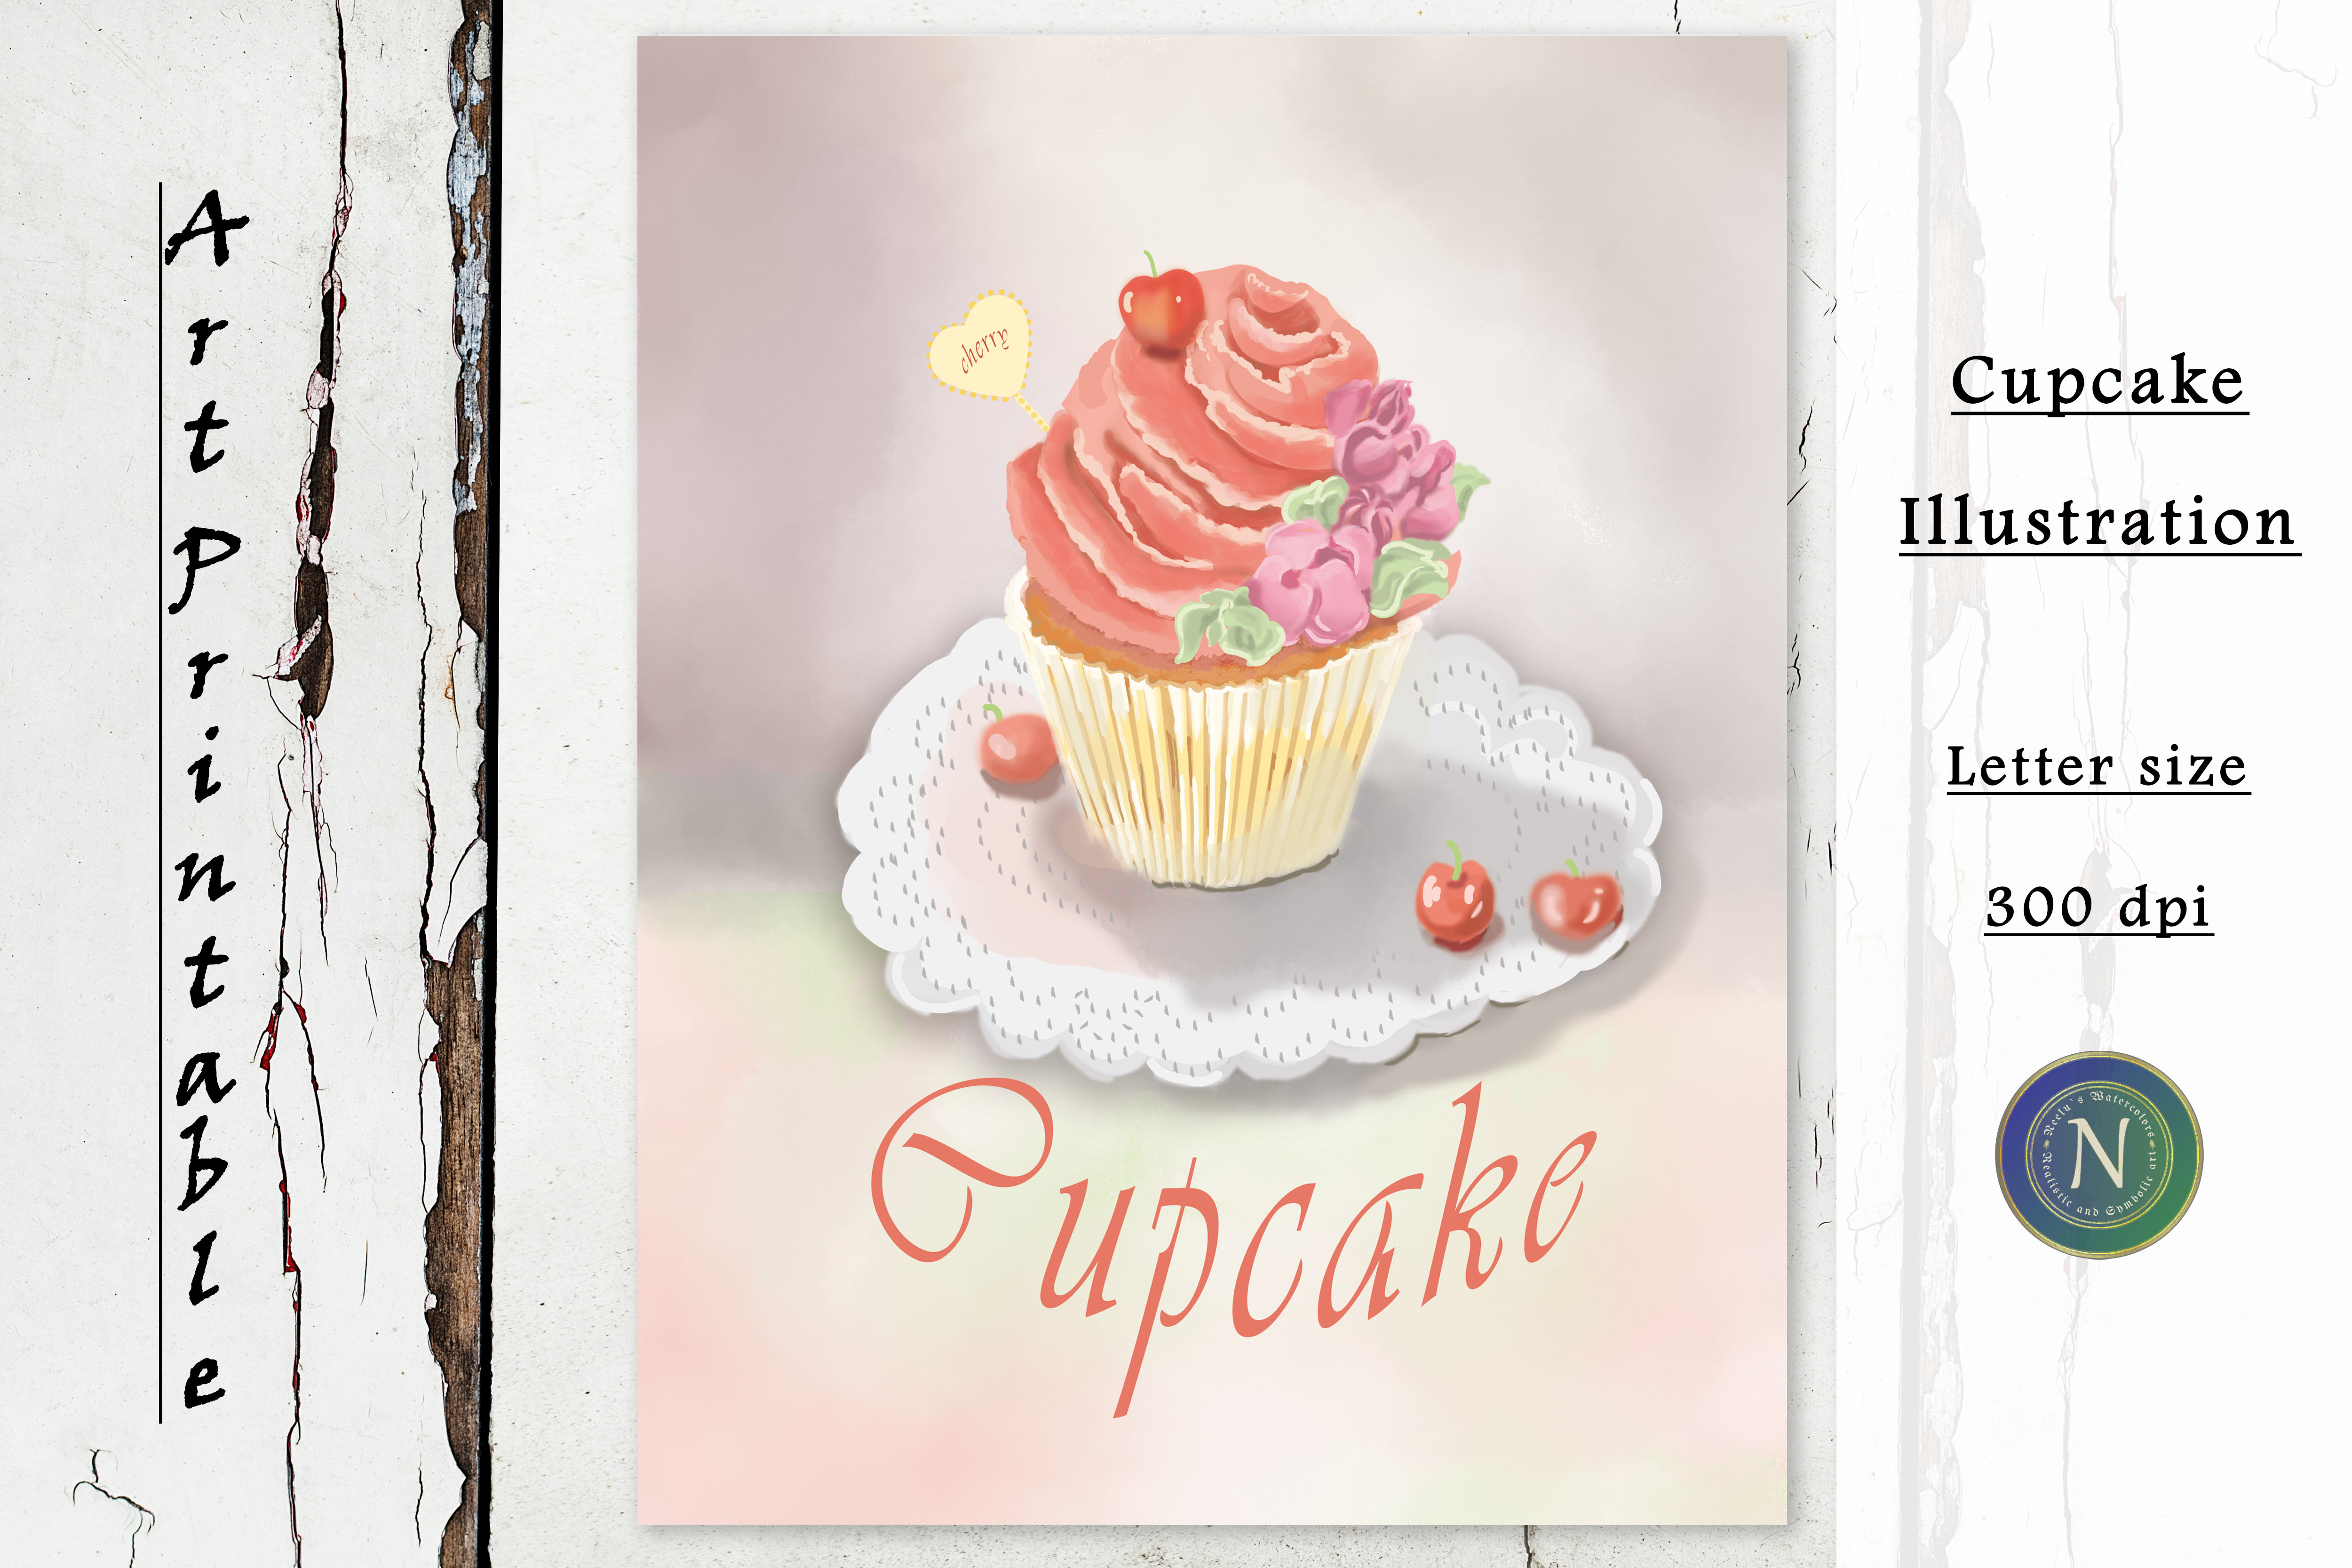 Cupcake illustration kitchen decor | Letter size |Art printable | Dorm decor instant download |Valentine gift for her| Personal use